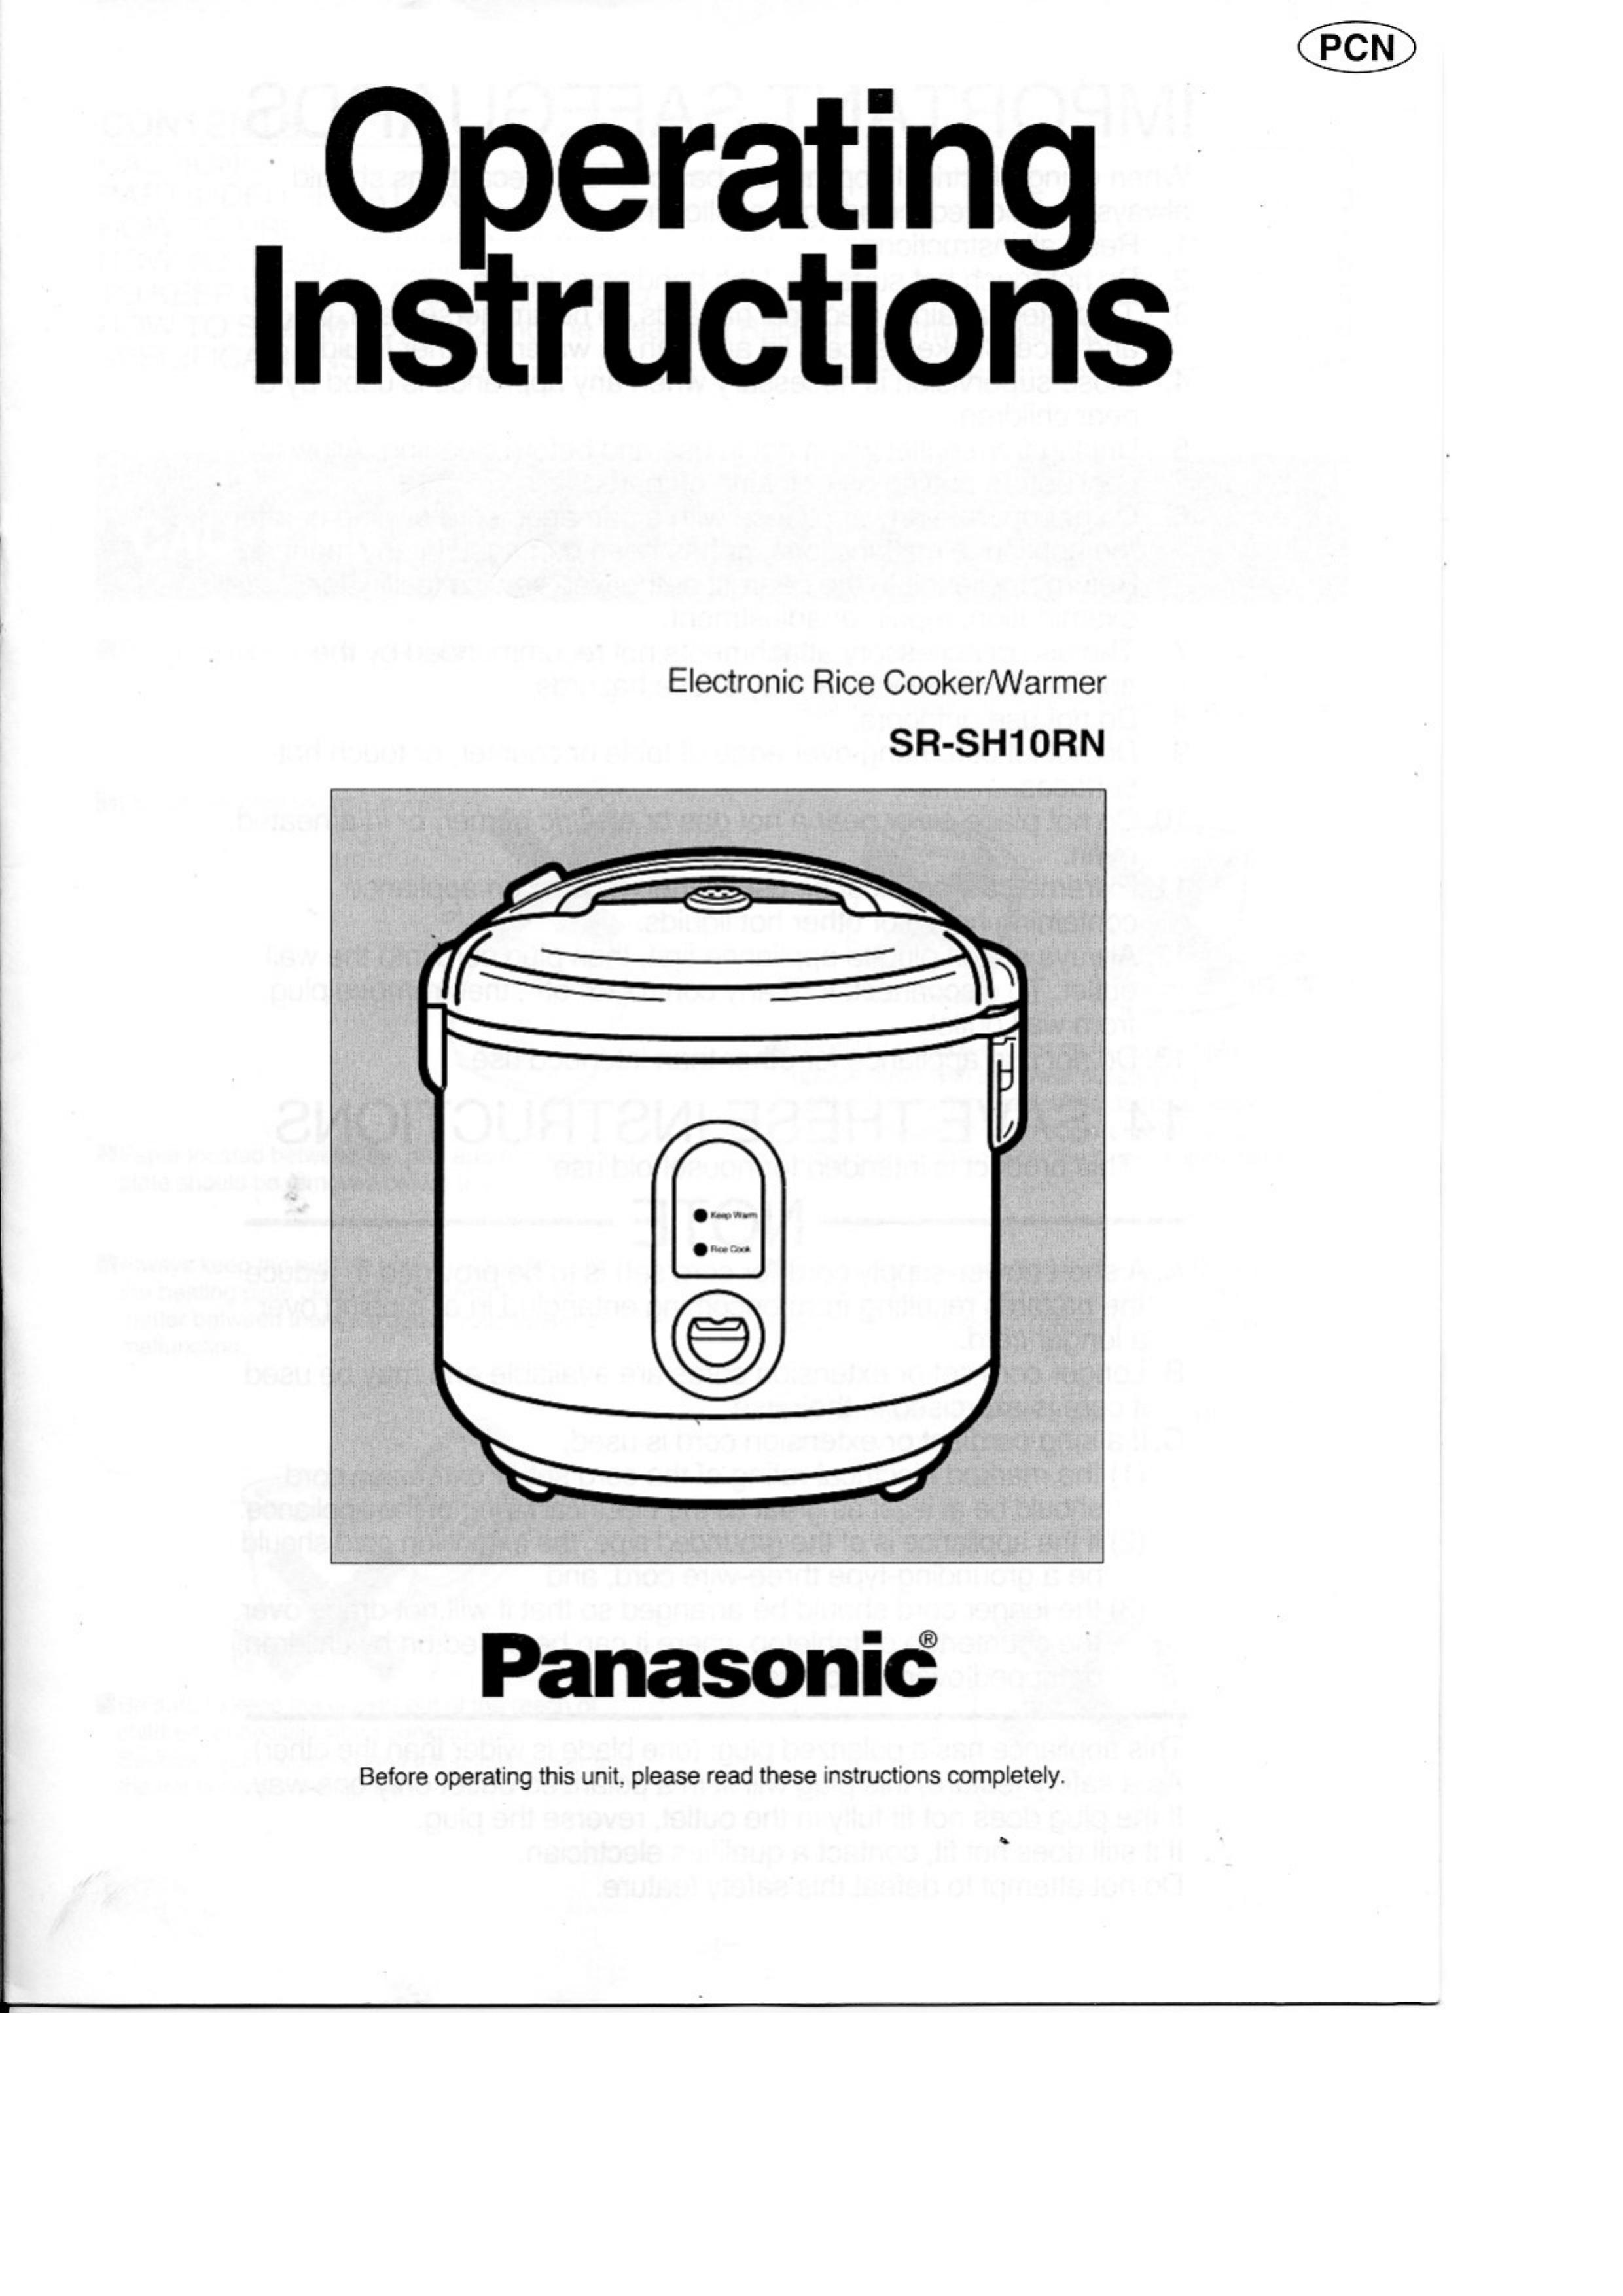 Panasonic SR-SH10RN Rice Cooker User Manual